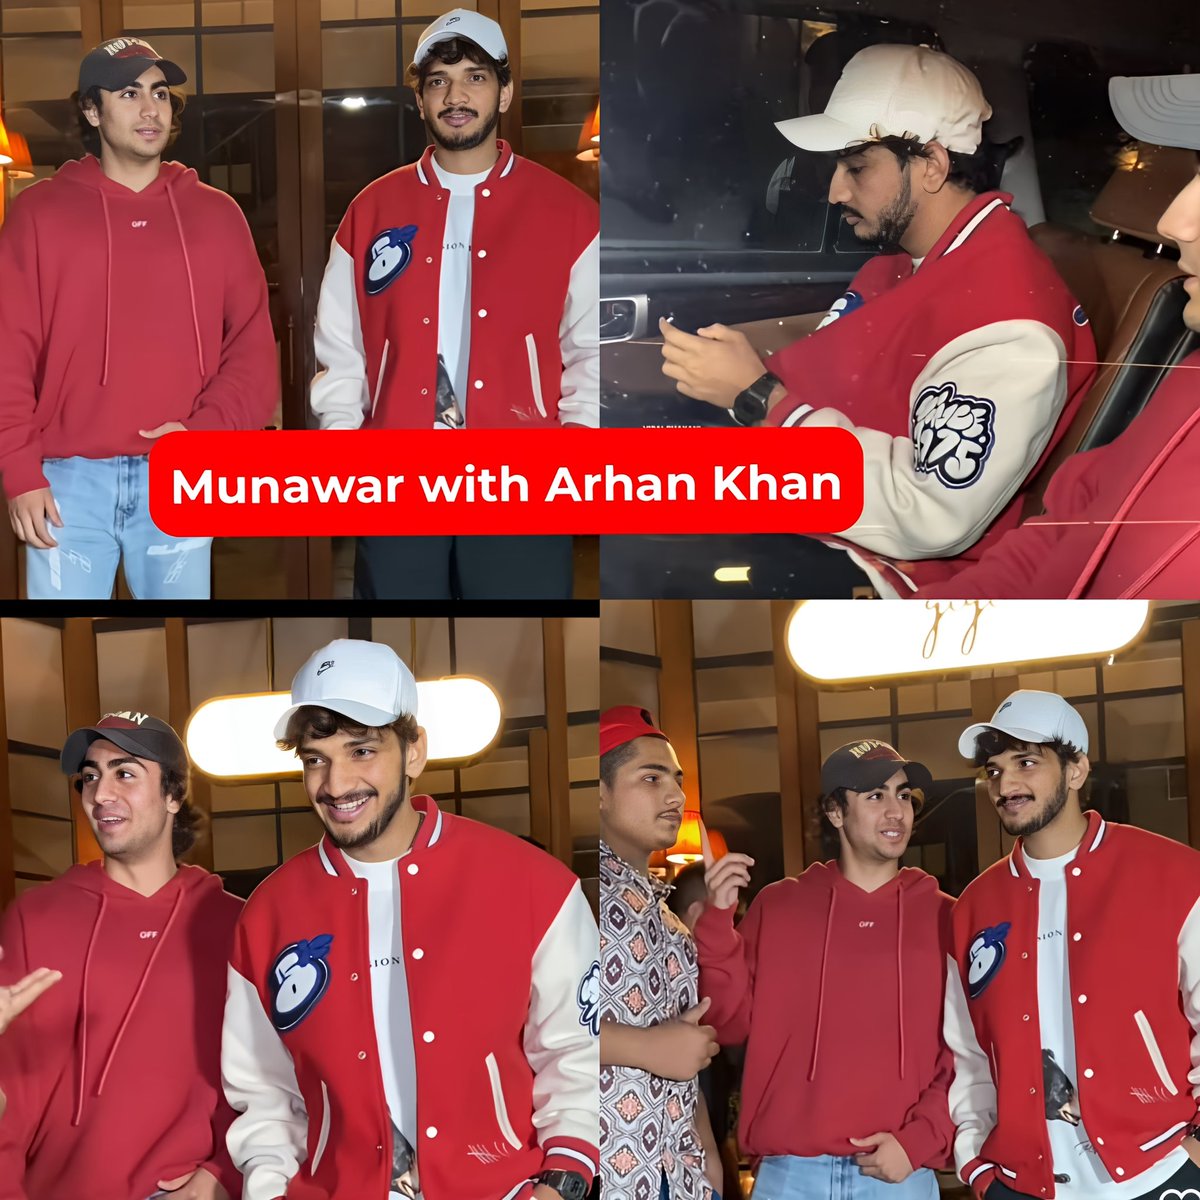 #MunawarFaruqui with #ArhaanKhan at restaurant